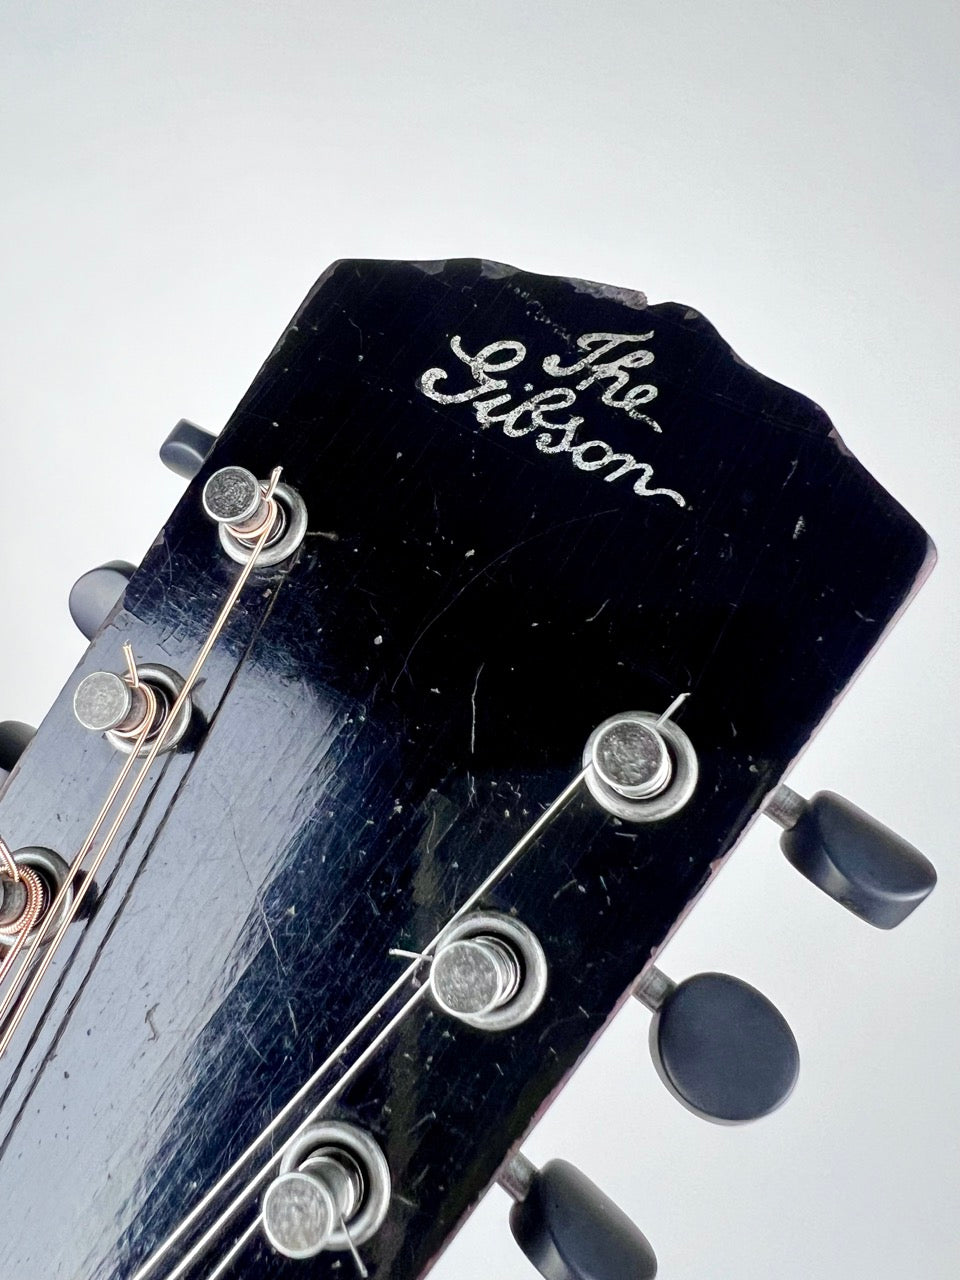 1926 Gibson A-JR mandolin